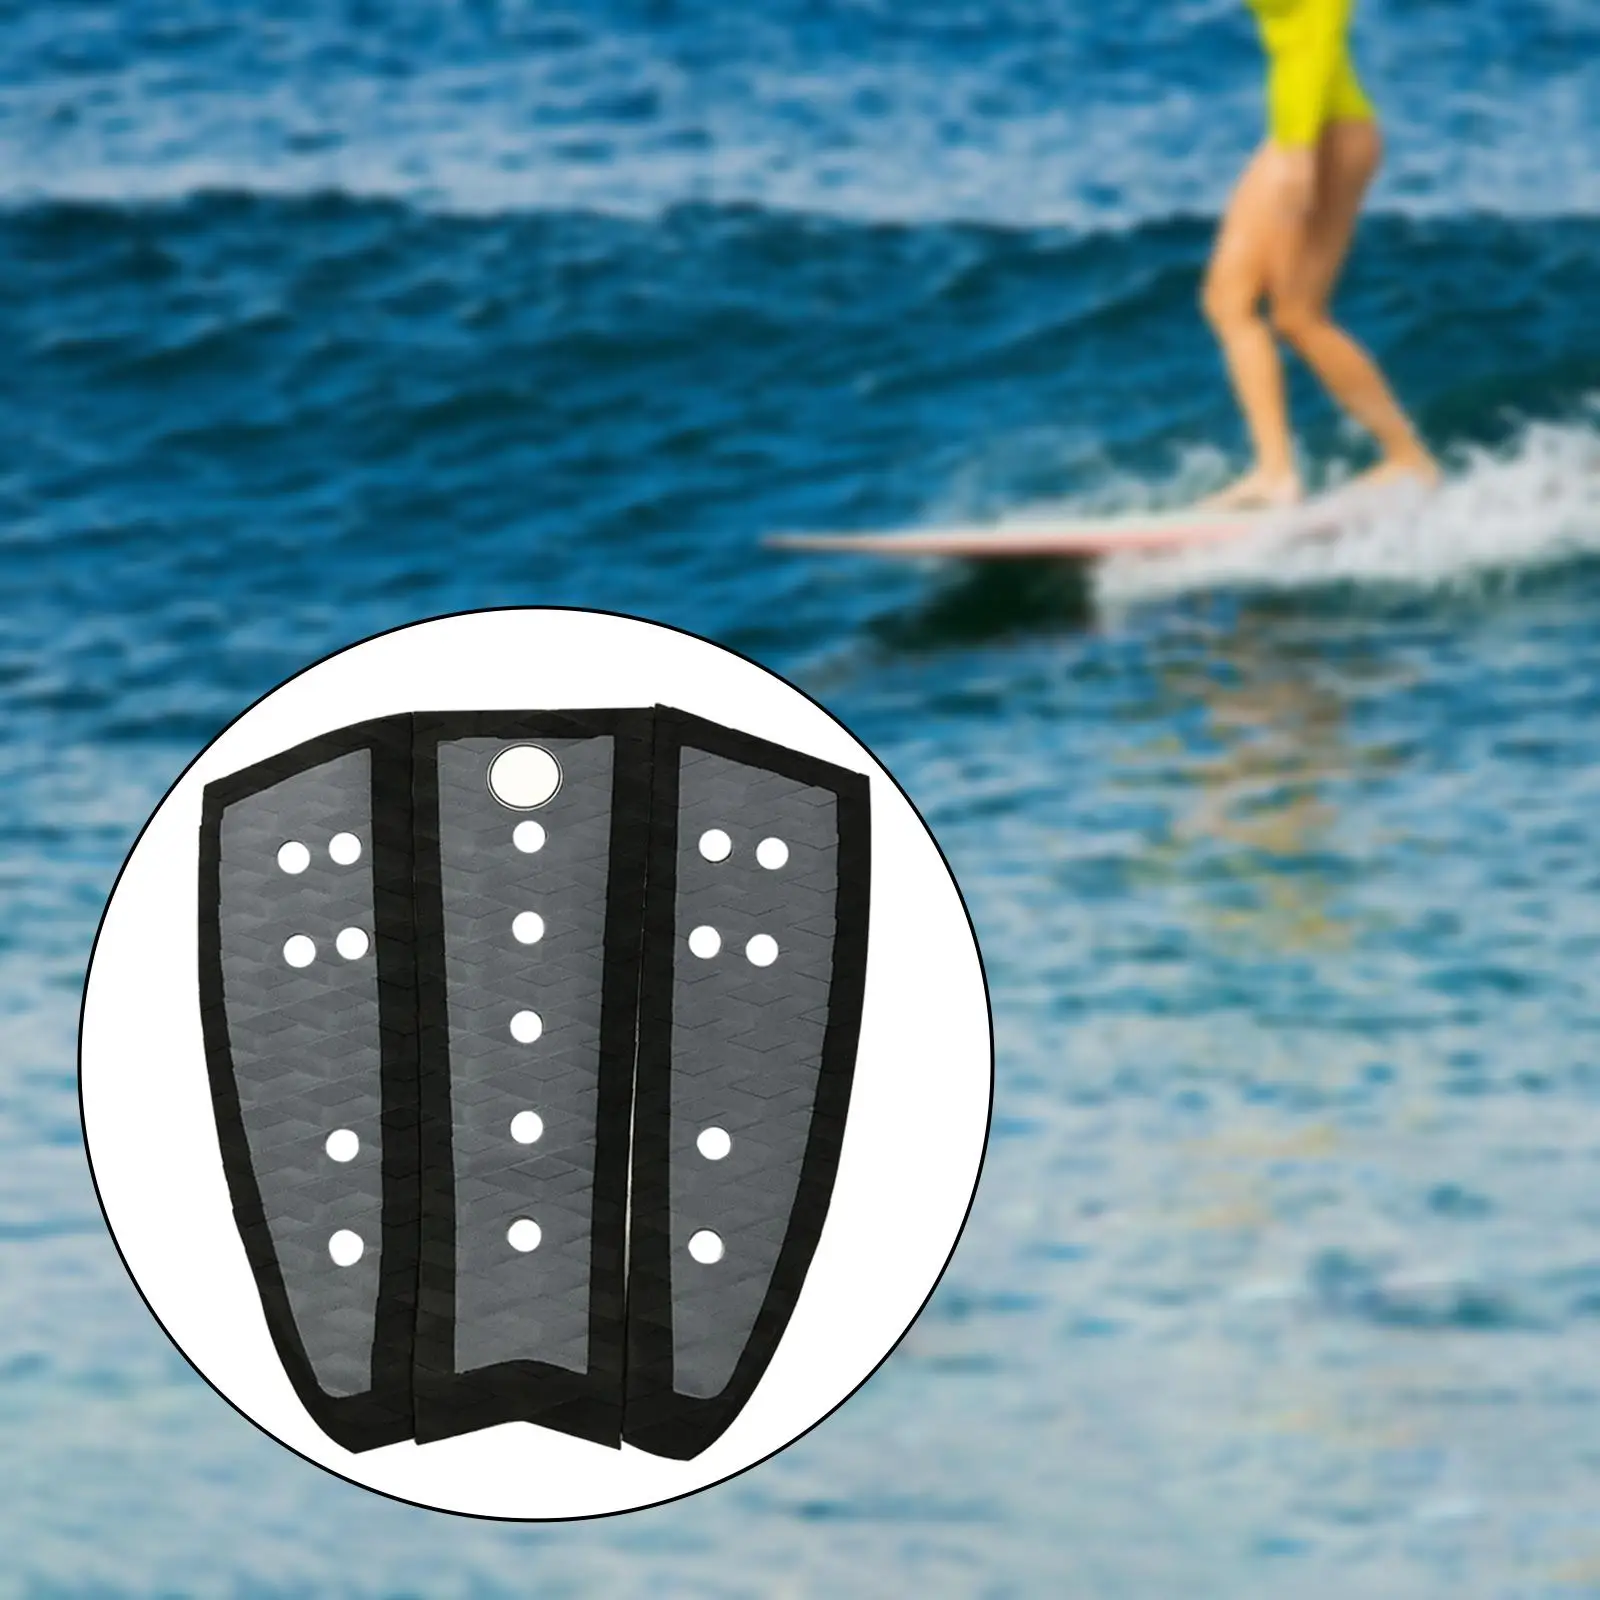 3Pcs Lightweight Surfboard Traction Pad Surfing Padding Deck Pad Grip Premium